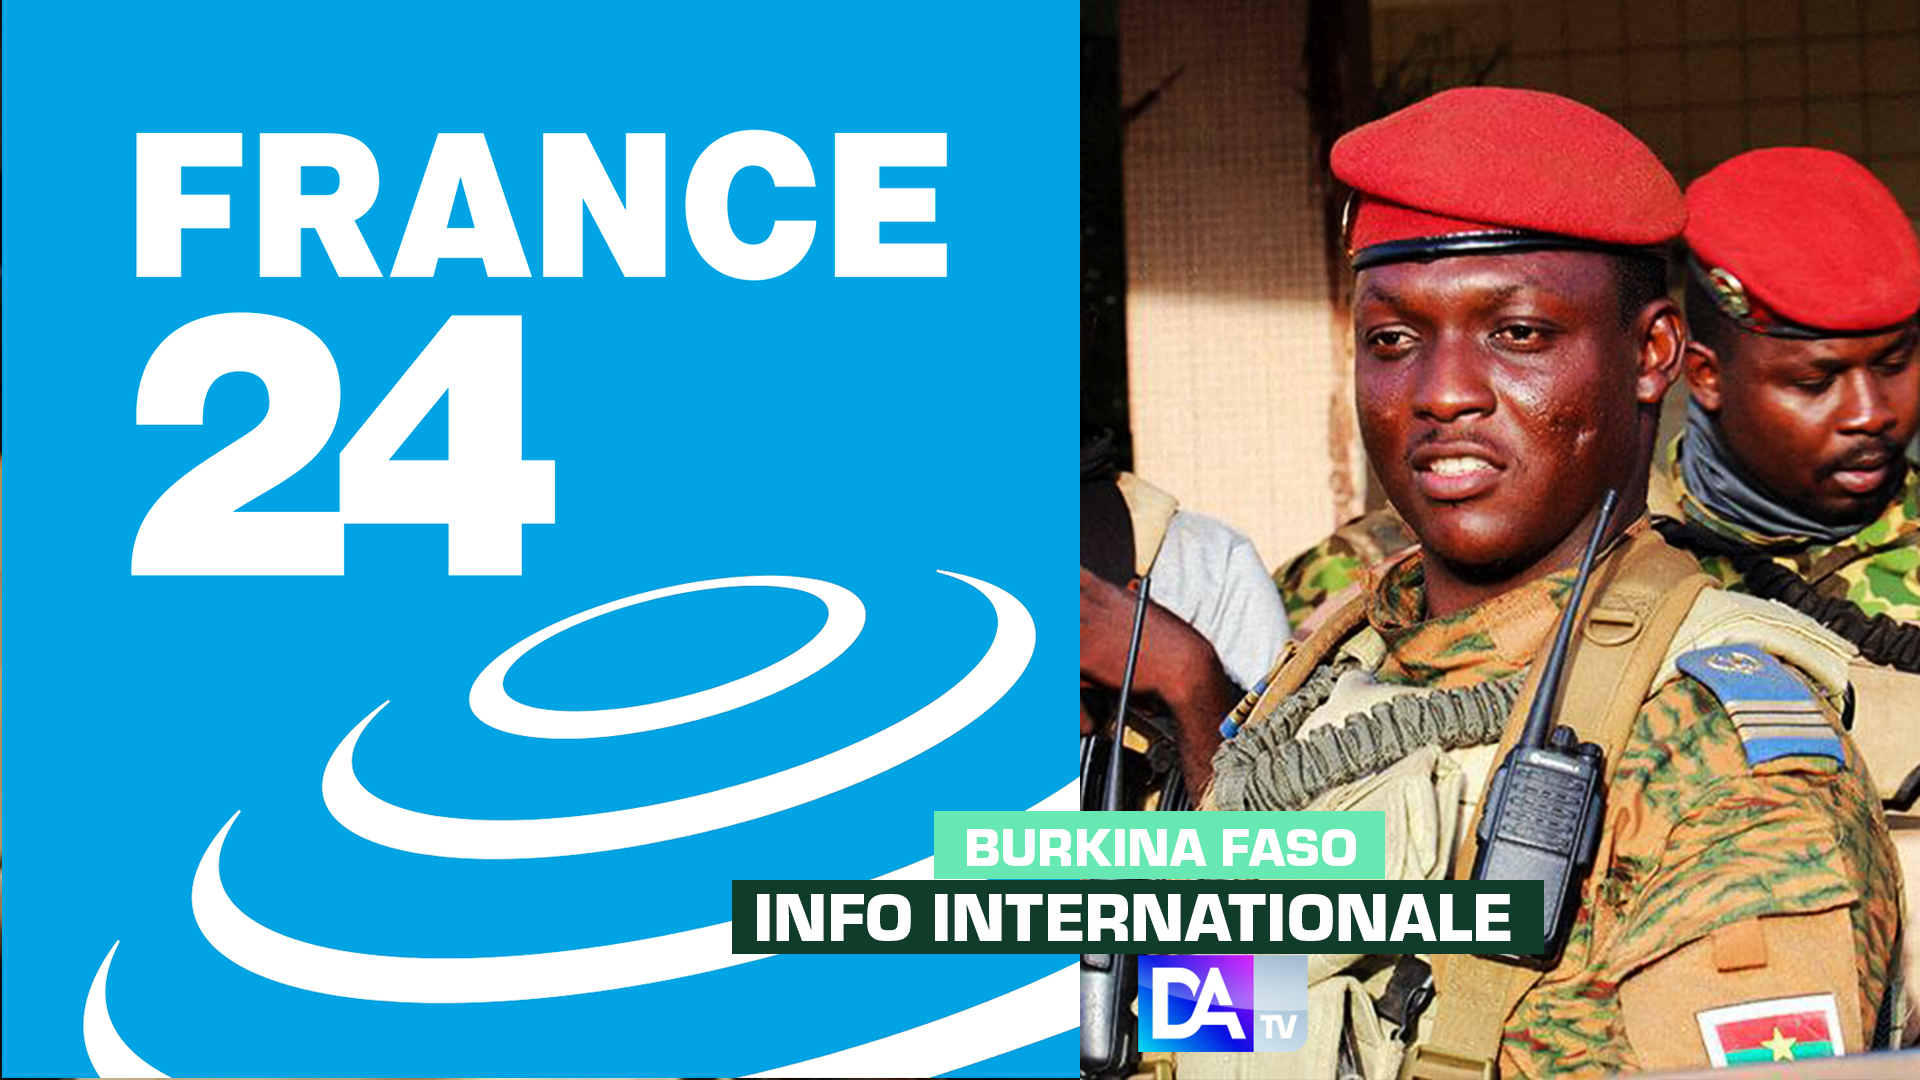 Les autorités burkinabè ordonnent la suspension de la diffusion de France 24